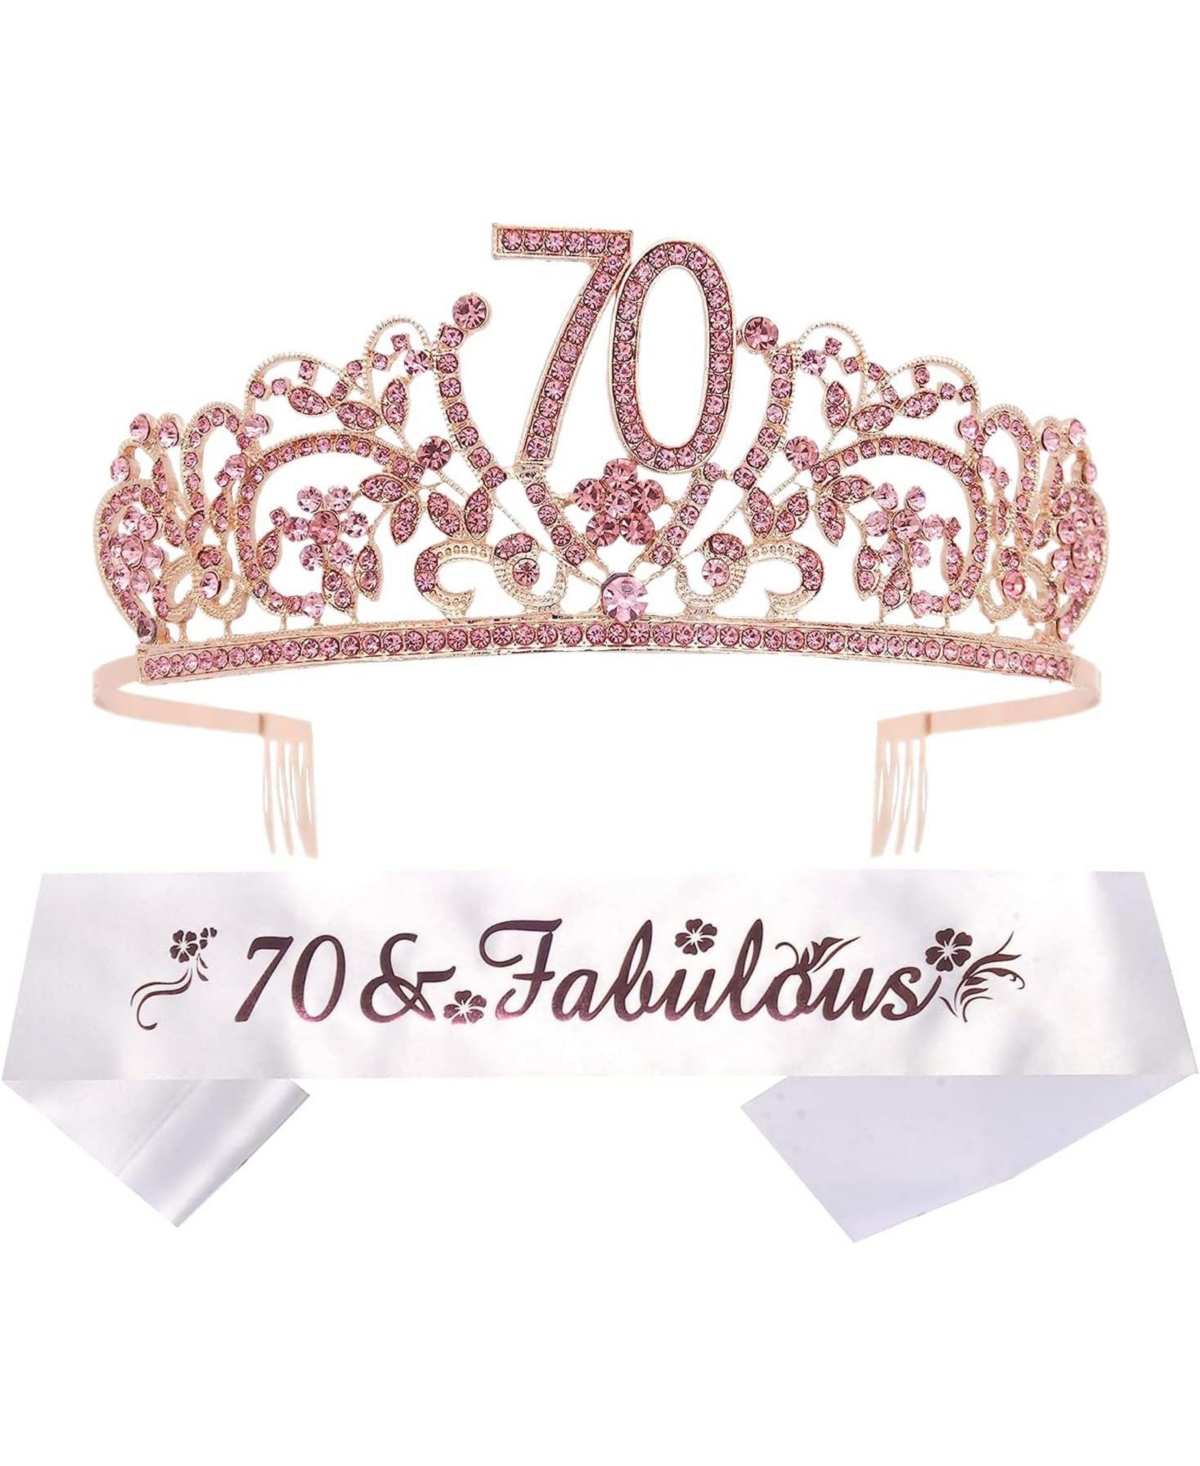 70th Birthday Sash and Tiara for Women - Fabulous Sash + Flowers Rhinestone Pink Premium Metal Tiara for Her, 70th Birthday Gifts for 70 Ce